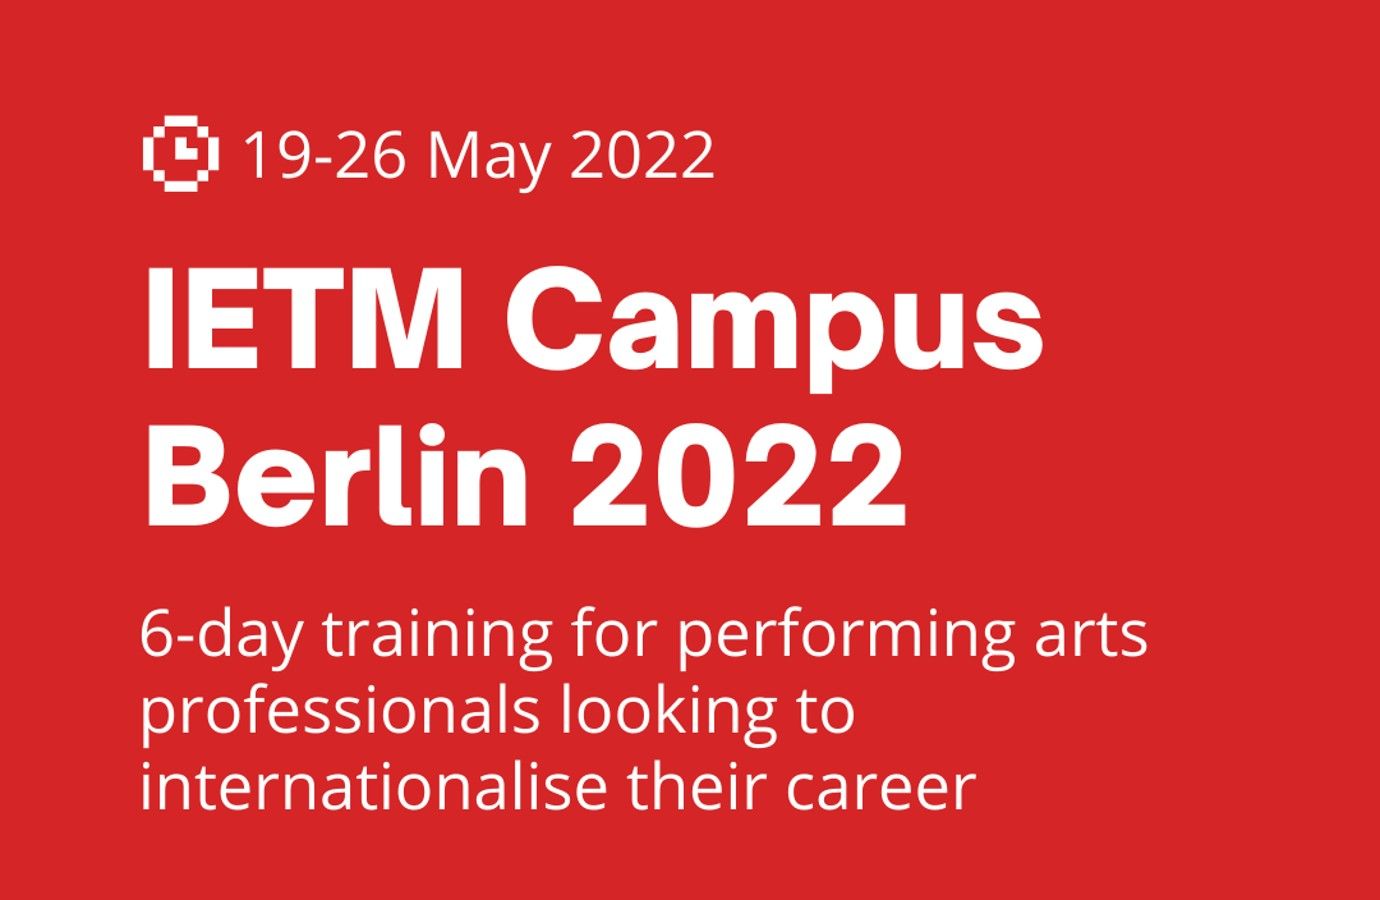 The IETM platform has launched registrations for the IETM Campus!